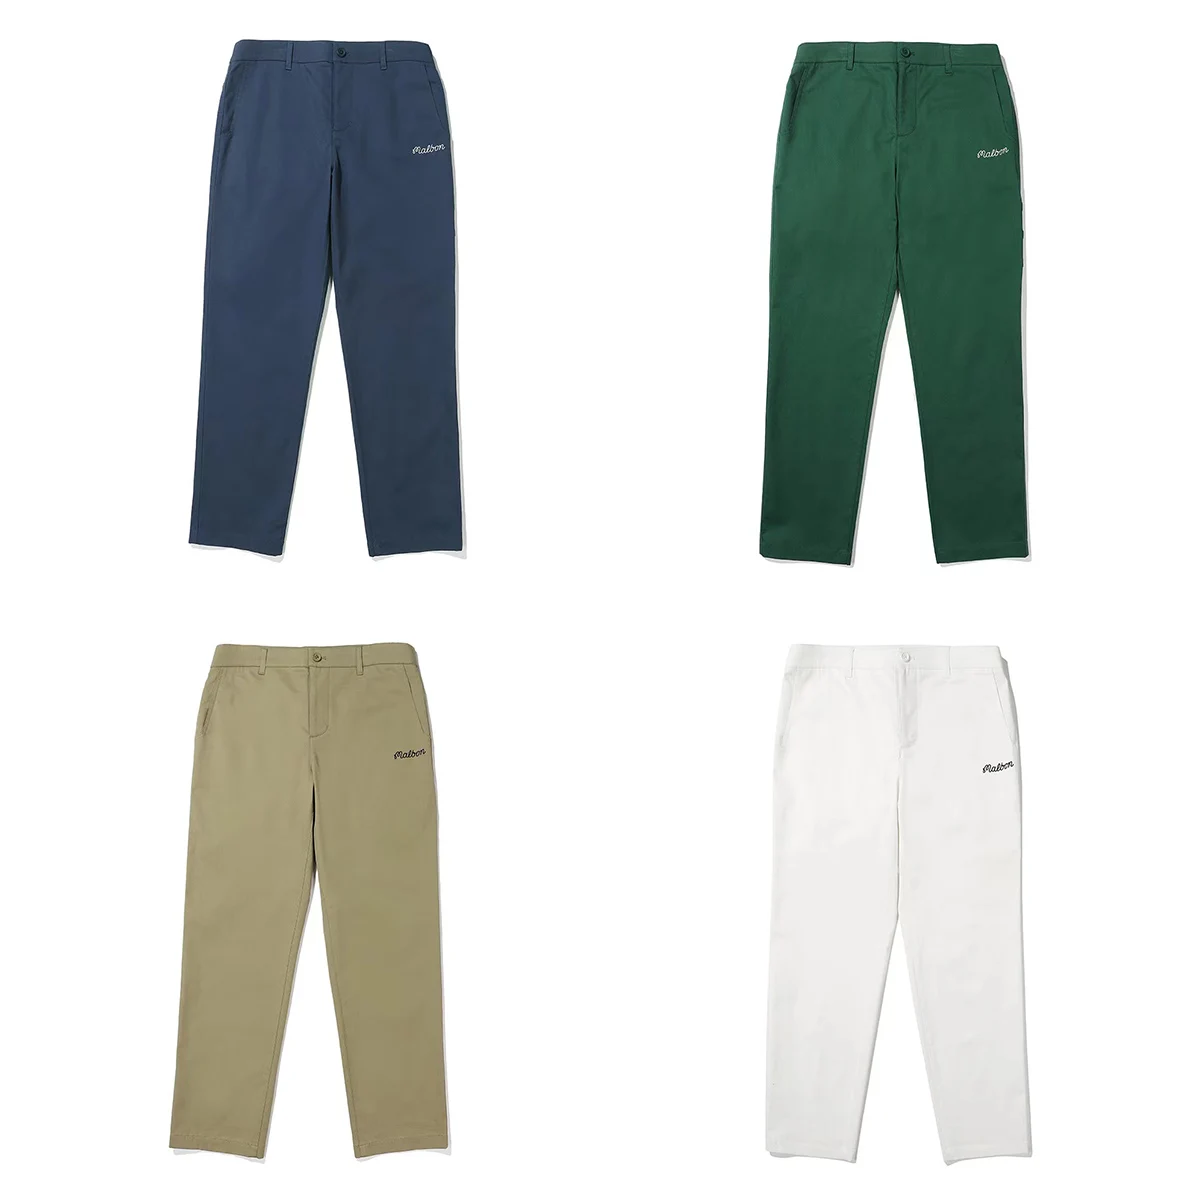 Golf Men's Pants | Pants Tracksuit | Golf Clothing | Sports Pants ...